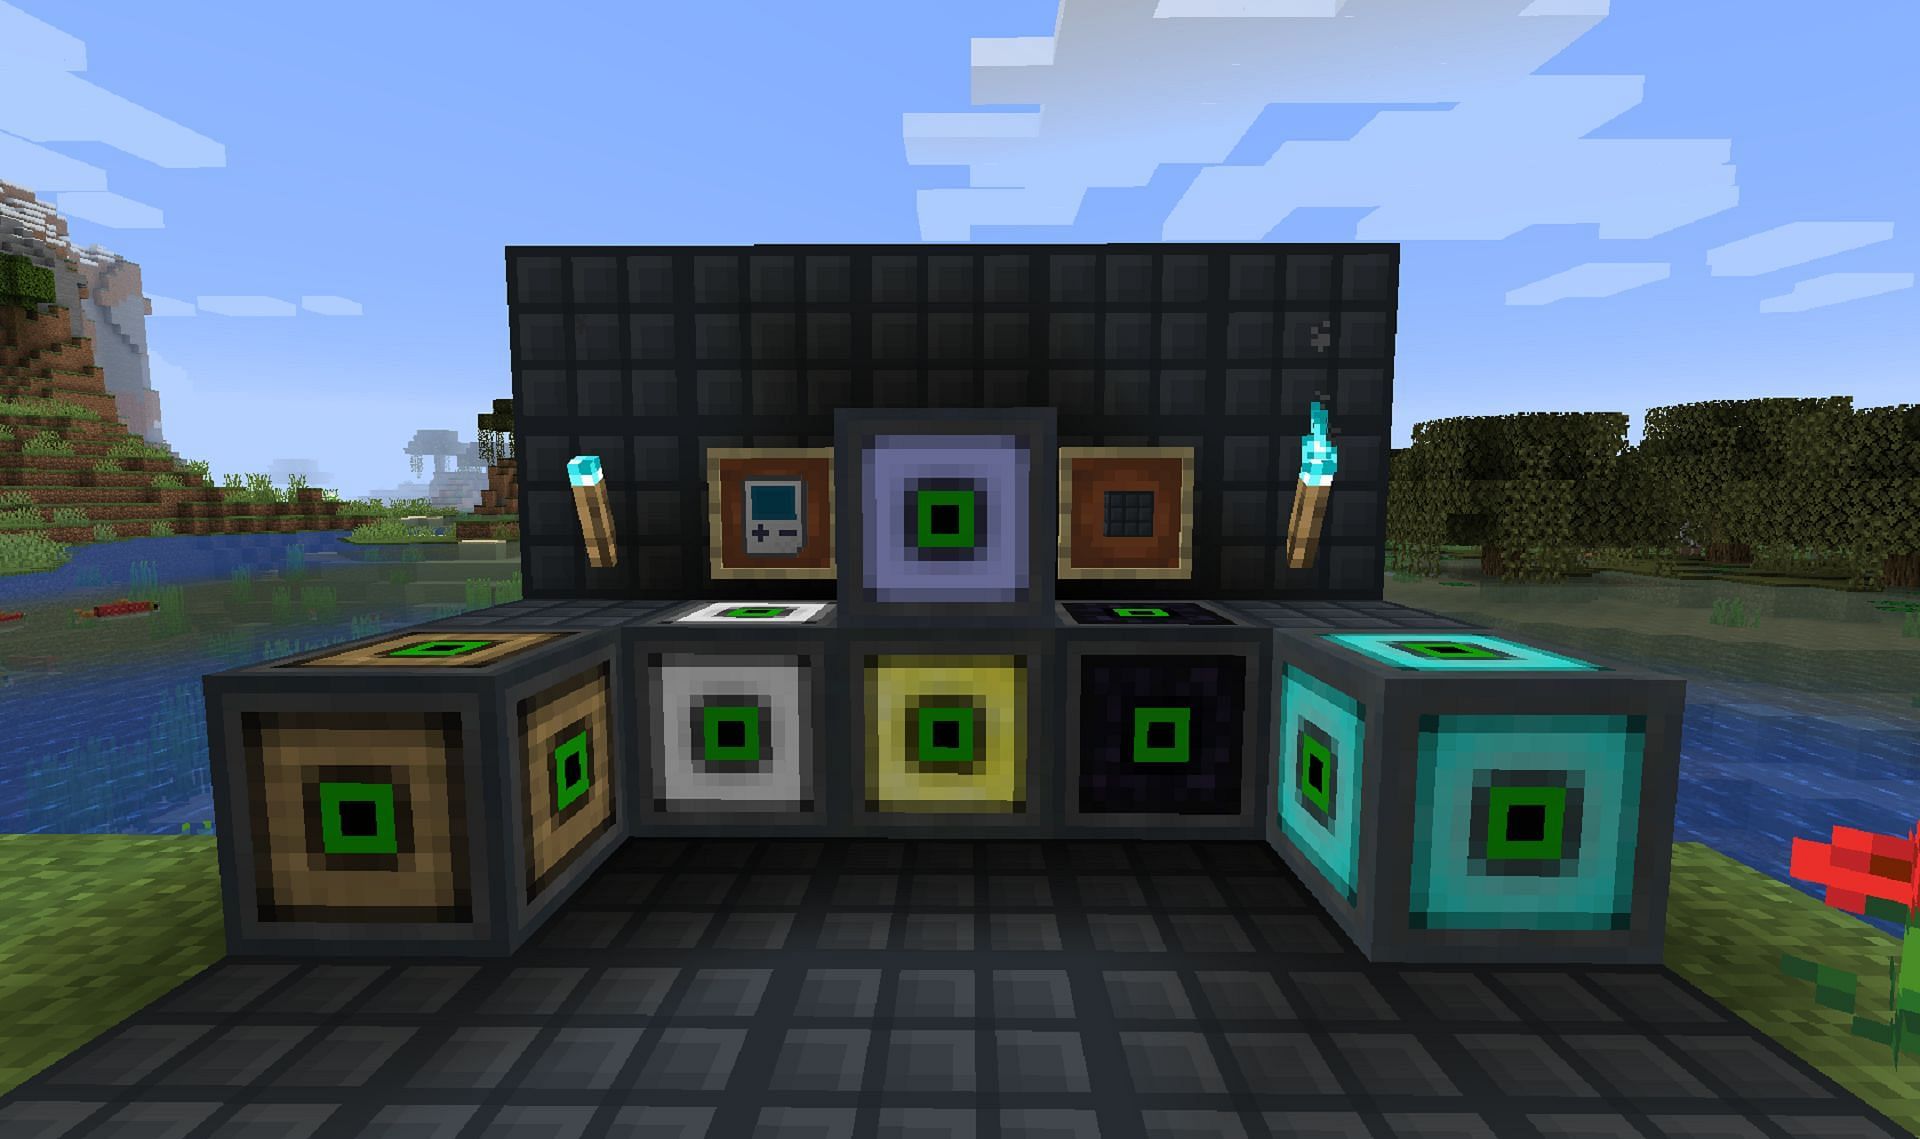 Machines housed inside of blocks via the mod (Image via davenonymous/CurseForge)